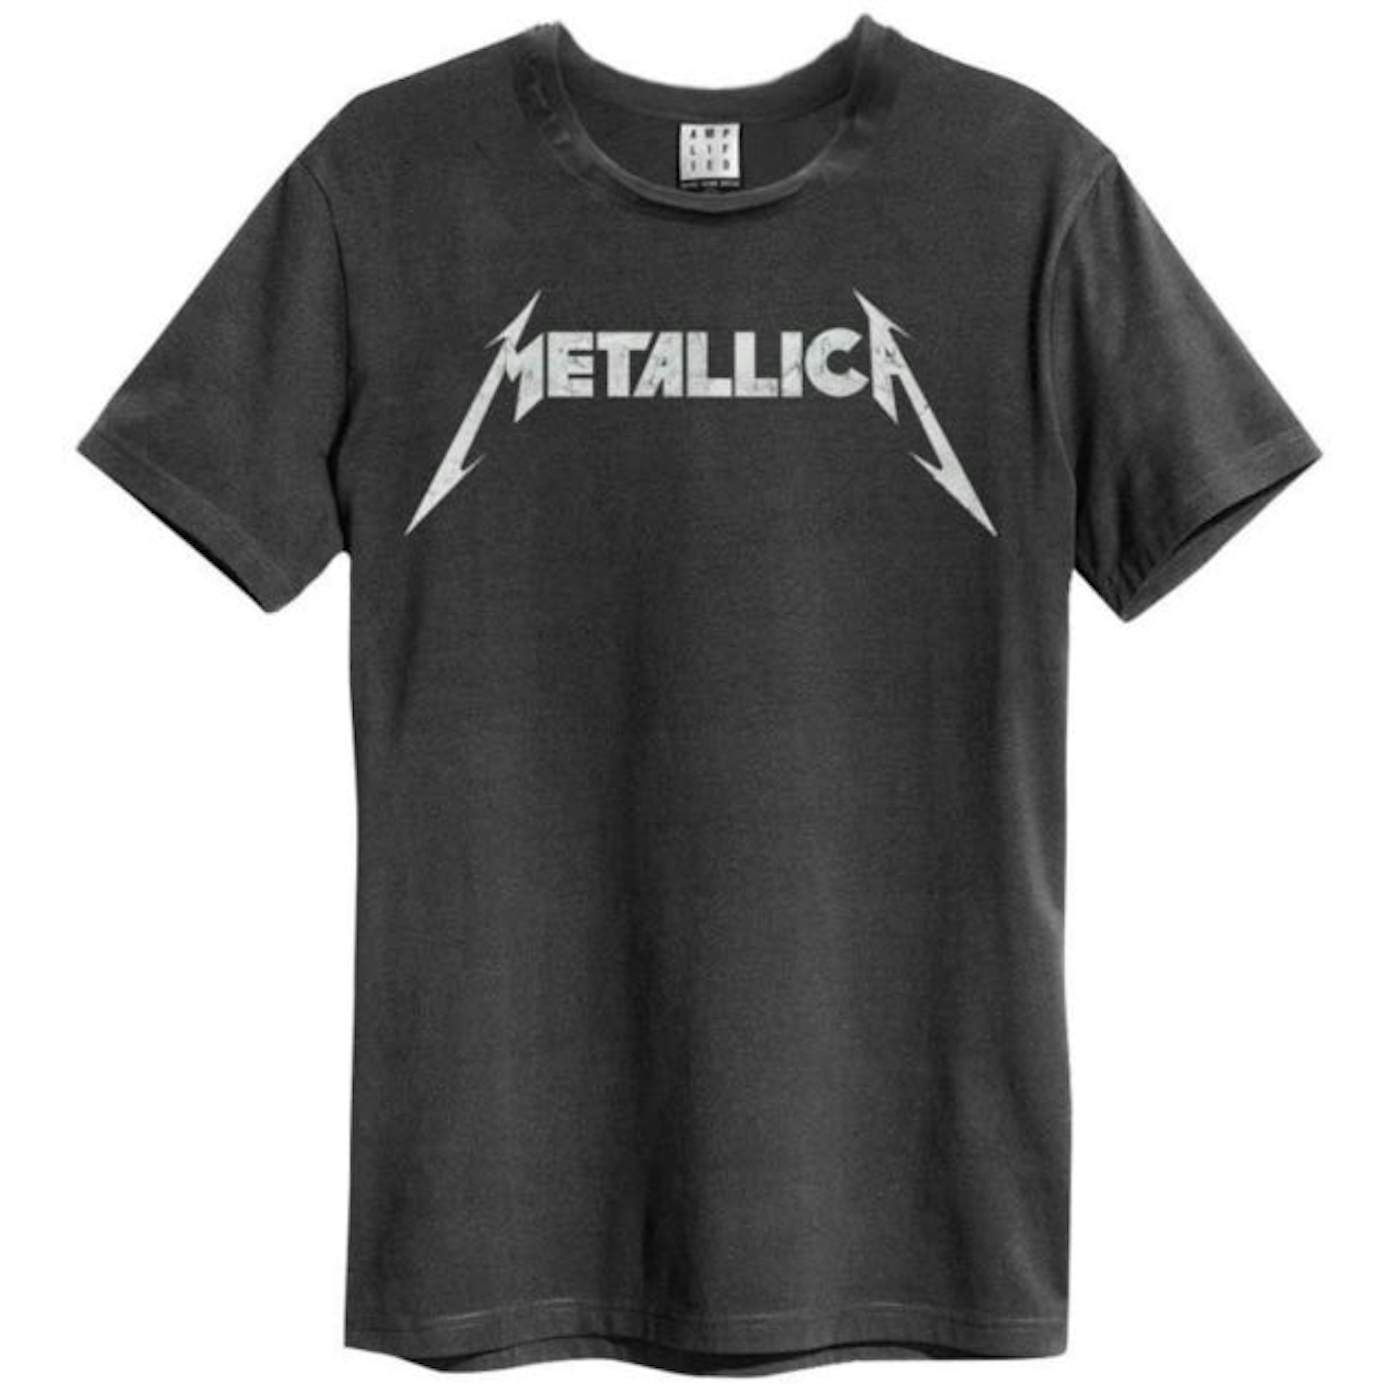 Metallica Kill 'em all patch - Steamretro